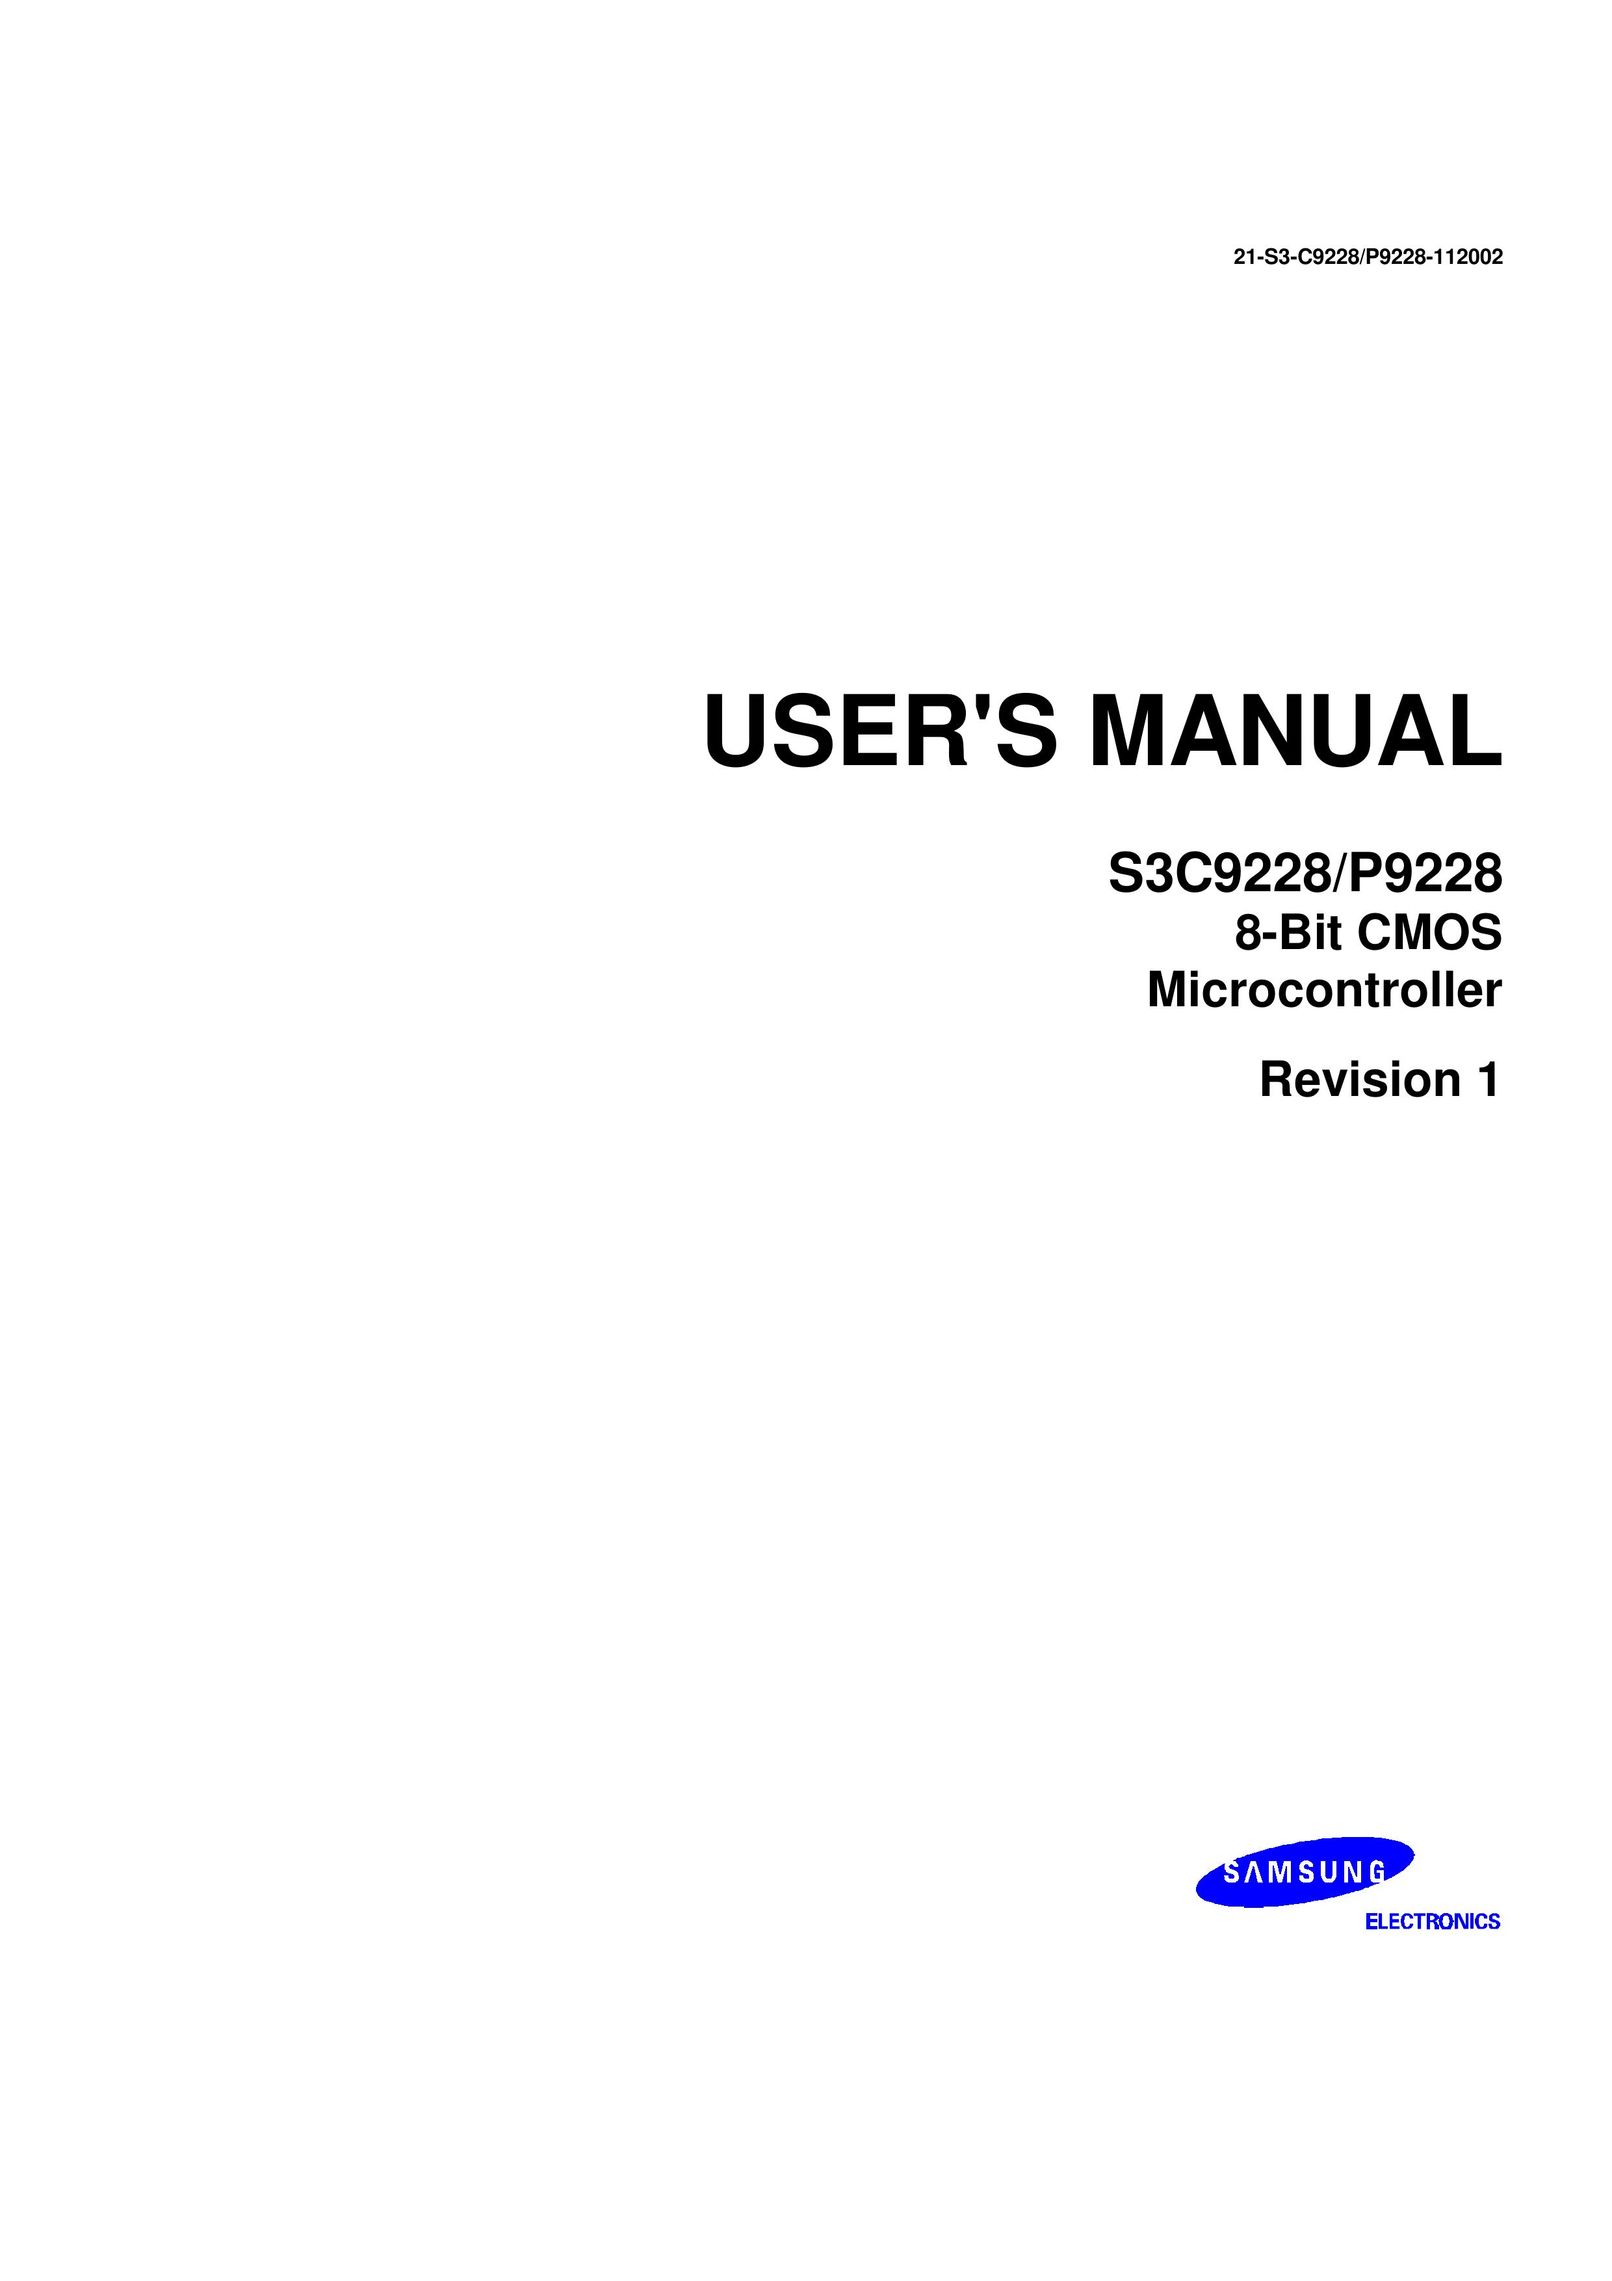 Samsung 8-Bit CMOS Microcontroller Microcassette Recorder User Manual